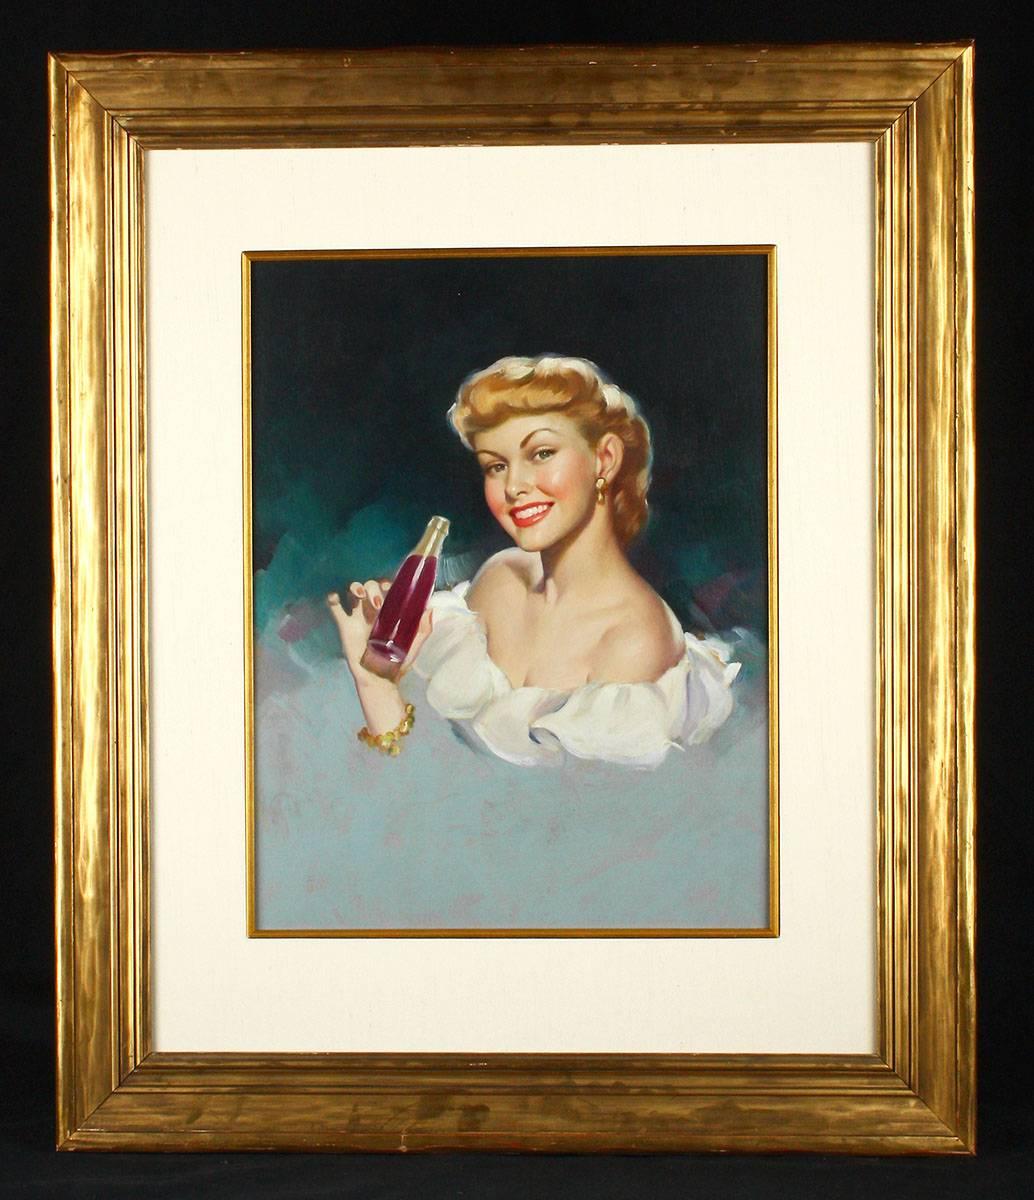 Pearl Frush Portrait Painting - The Grapette Girl